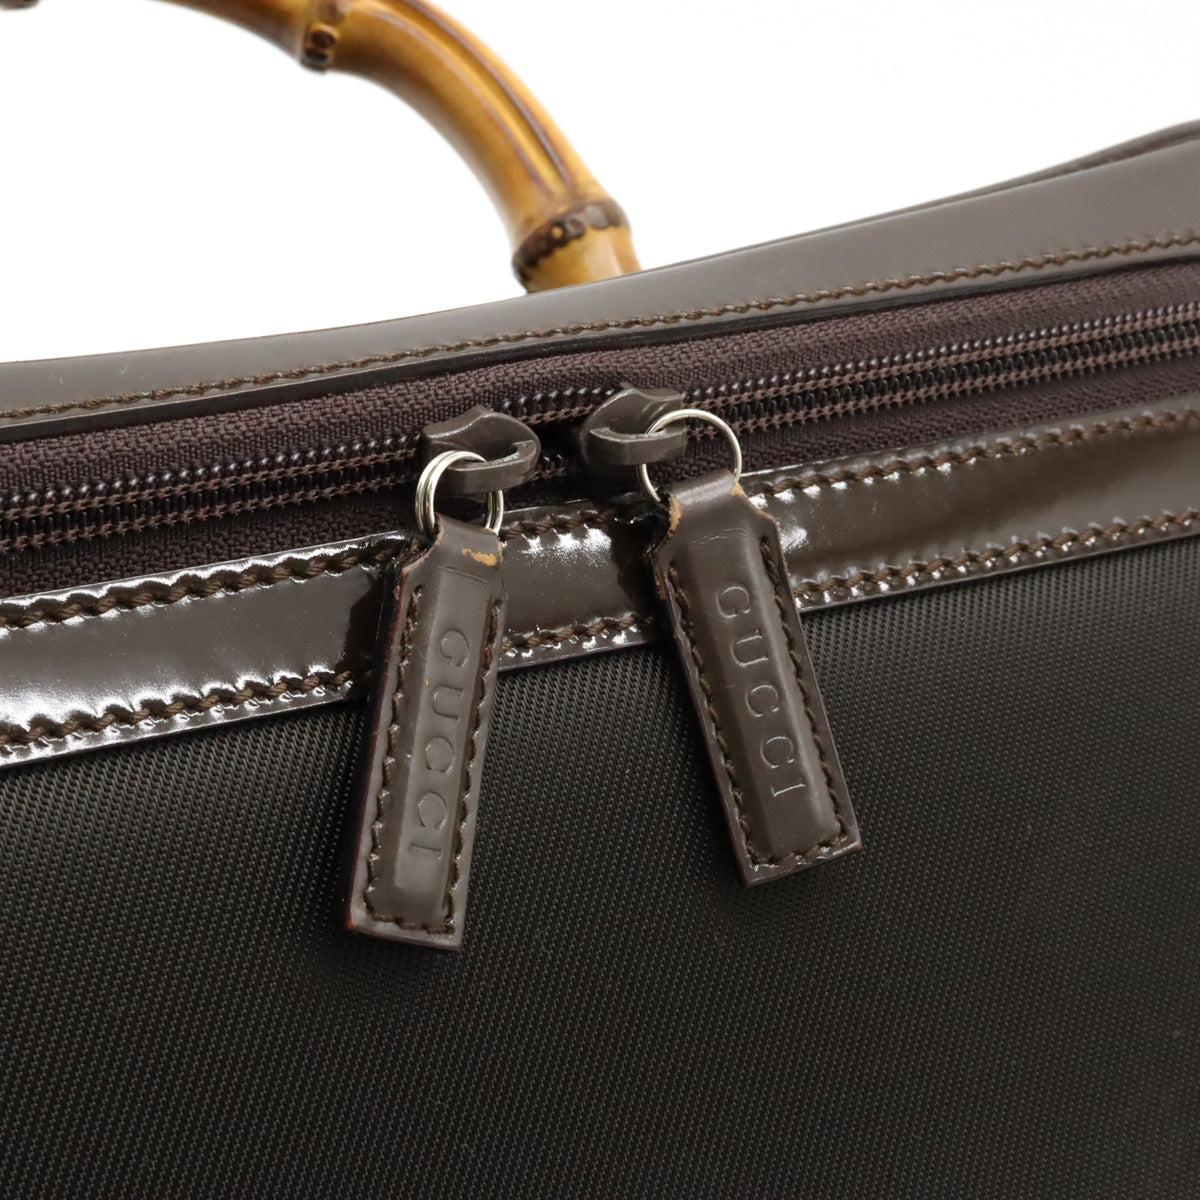 GUCCI Gucci Bamboo Vanity Bag Handbag  Bag 2WAY Shoulder Bag Nylon Patent Leather Brown 013.2122.2491